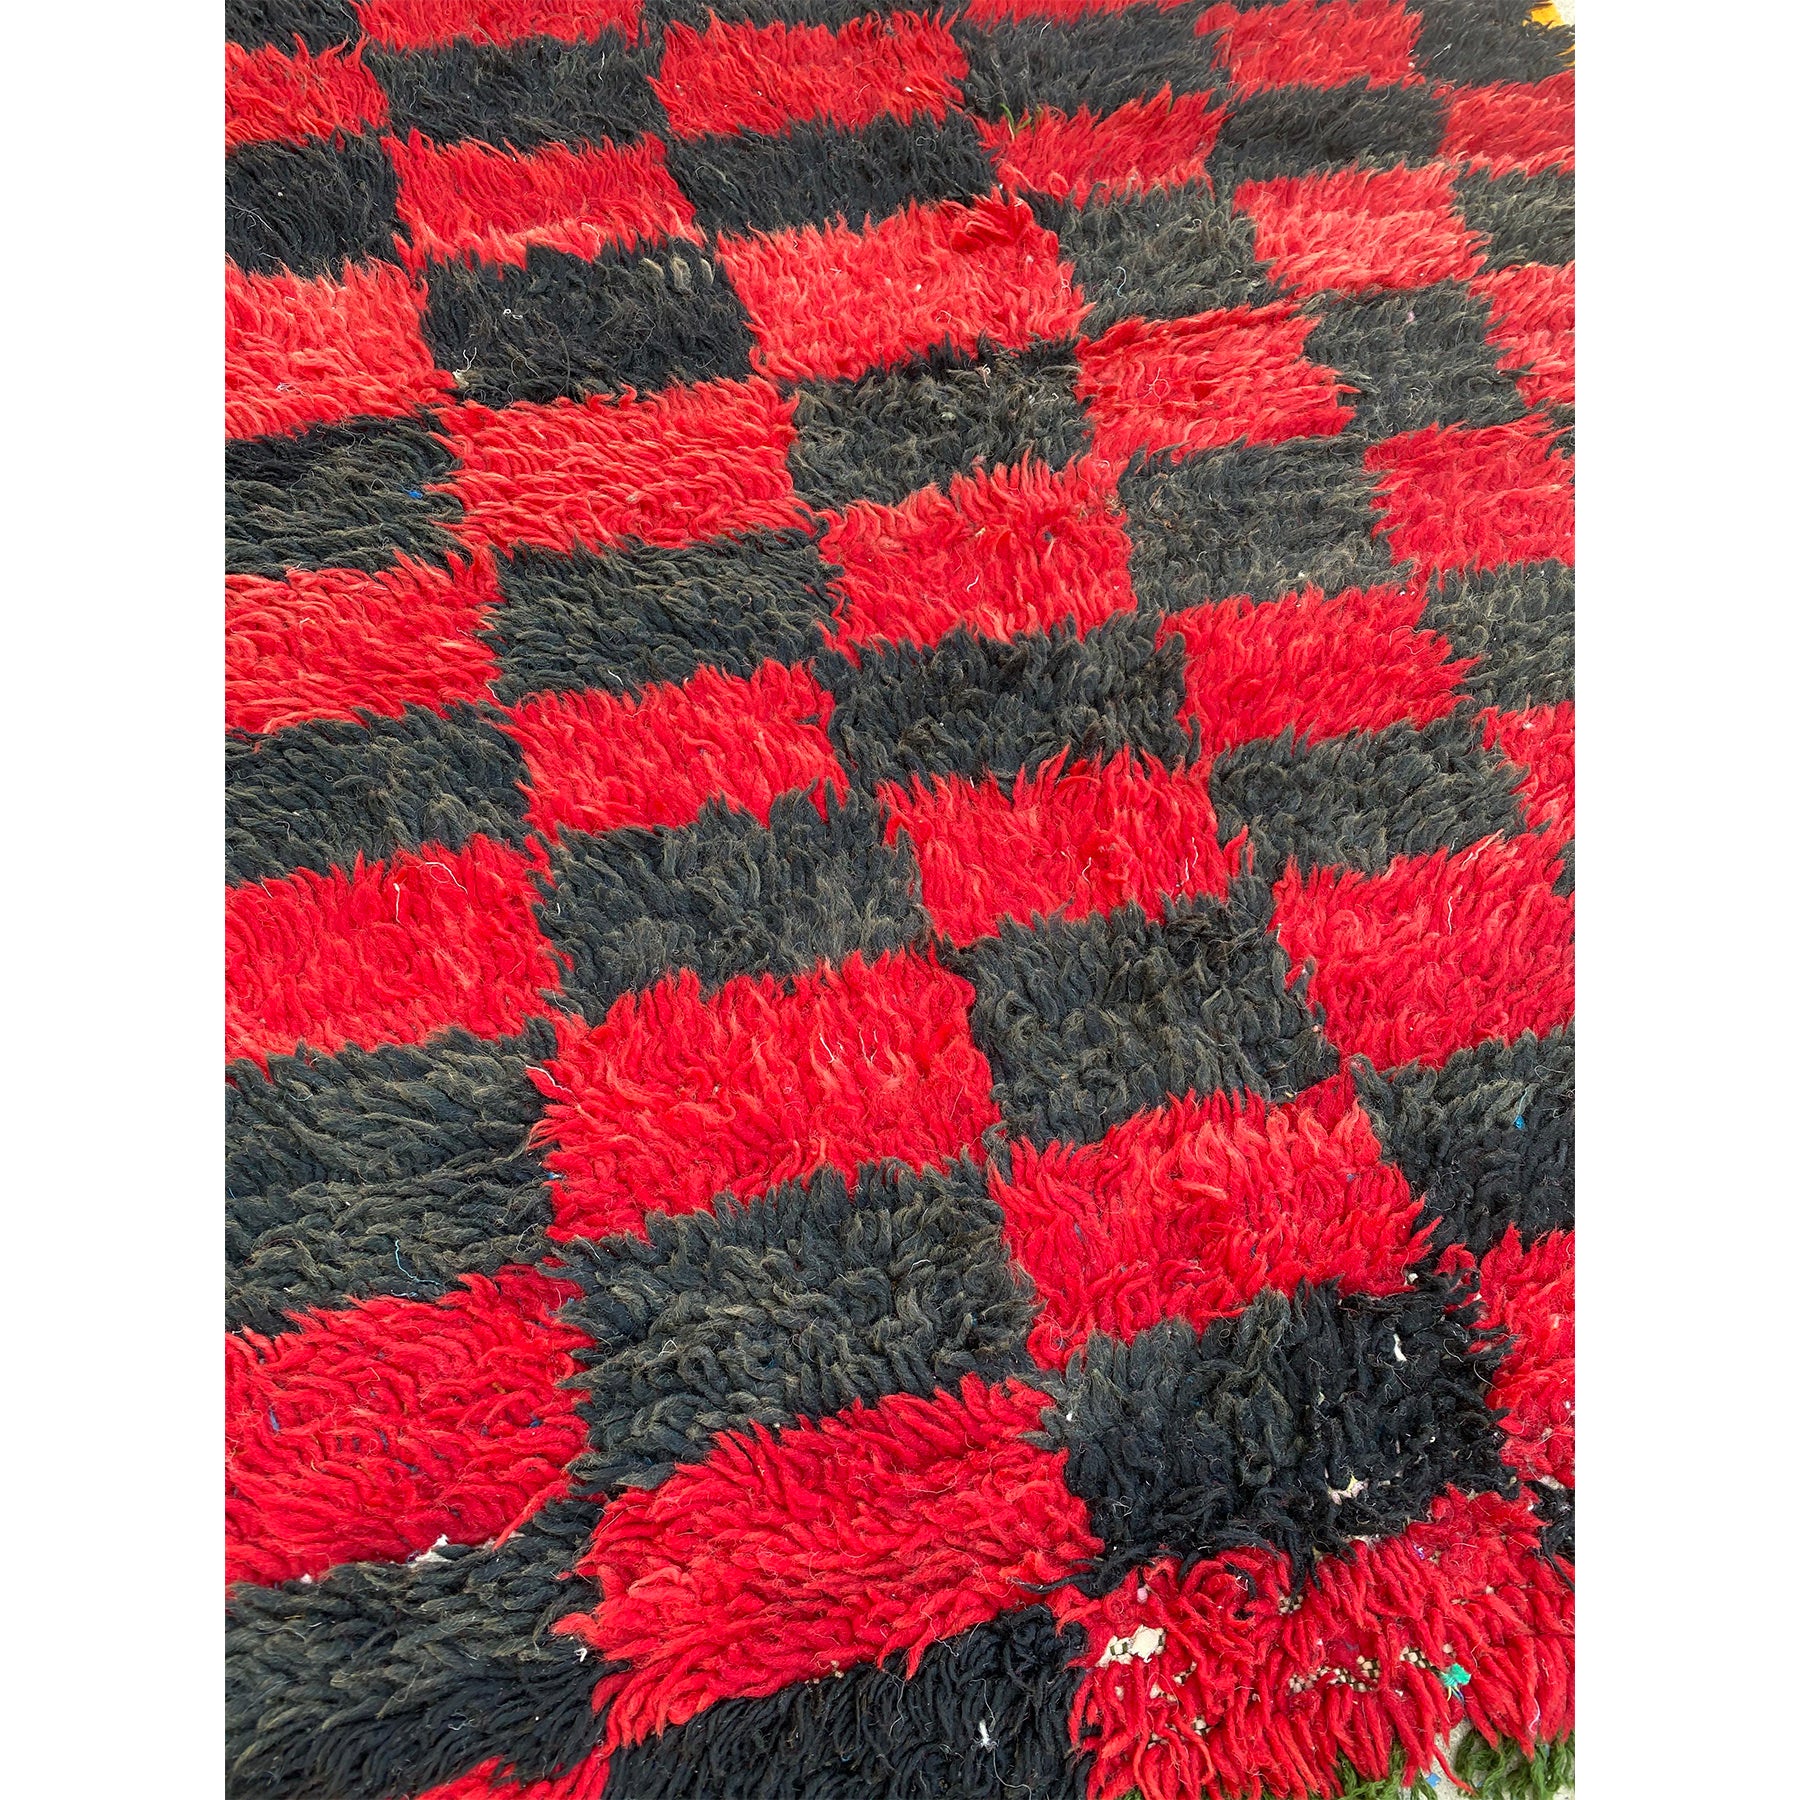 Plush vintage red and black Moroccan checkerboard throw rug - Kantara | Moroccan Rugs